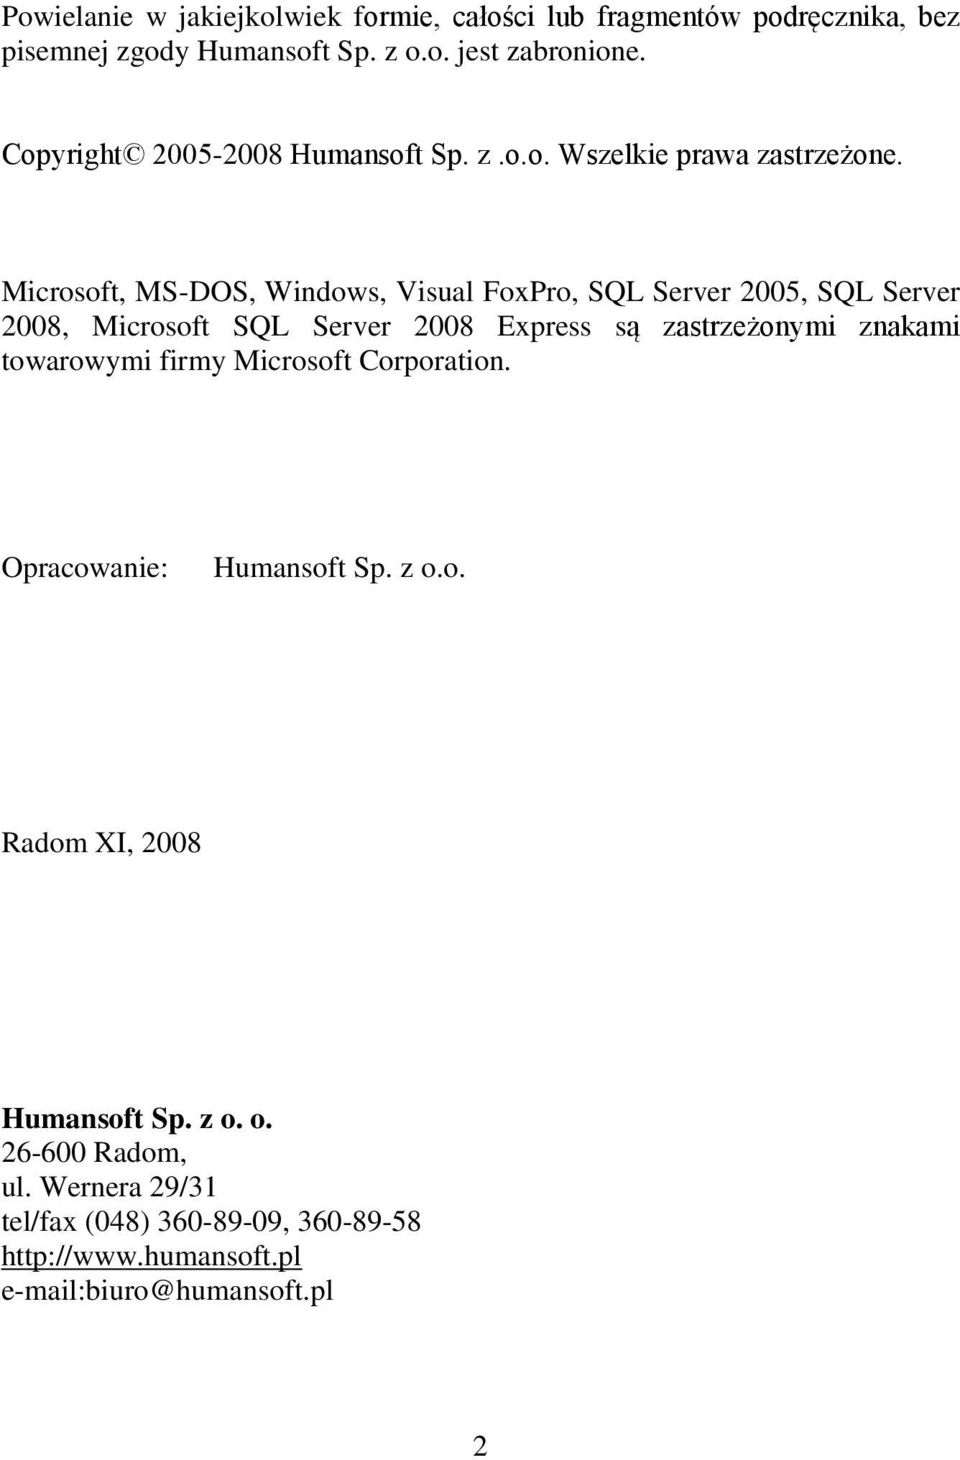 Microsoft, MS-DOS, Windows, Visual FoxPro, SQL Server 2005, SQL Server 2008, Microsoft SQL Server 2008 Express są zastrzeżonymi znakami